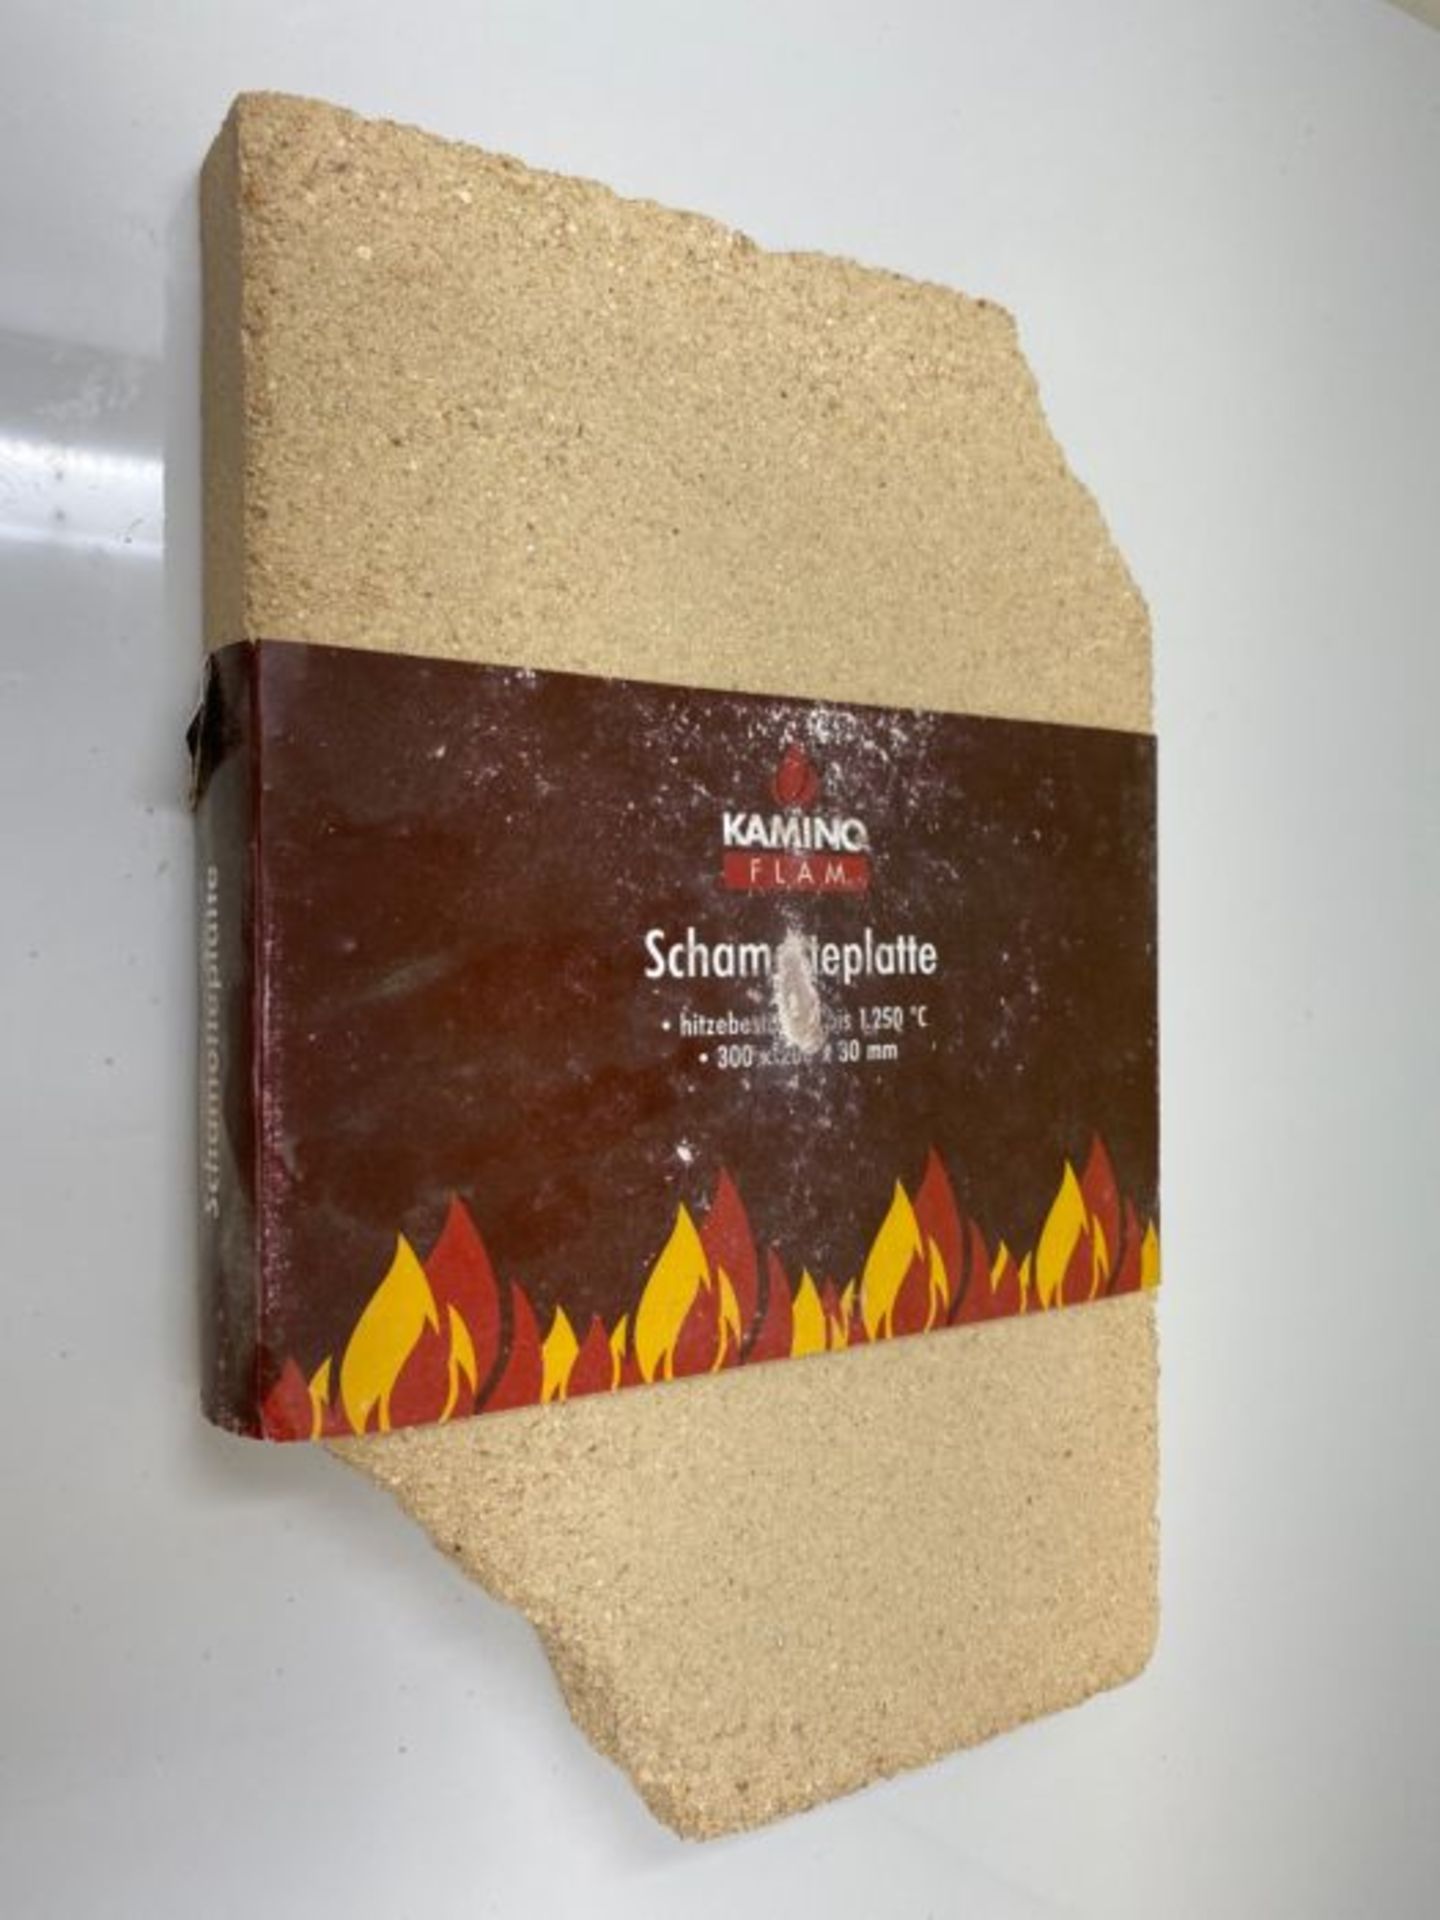 Kamino-Flam 333303 High Temp Fire Brick, Brown, 30x20x3 cm - Image 2 of 2